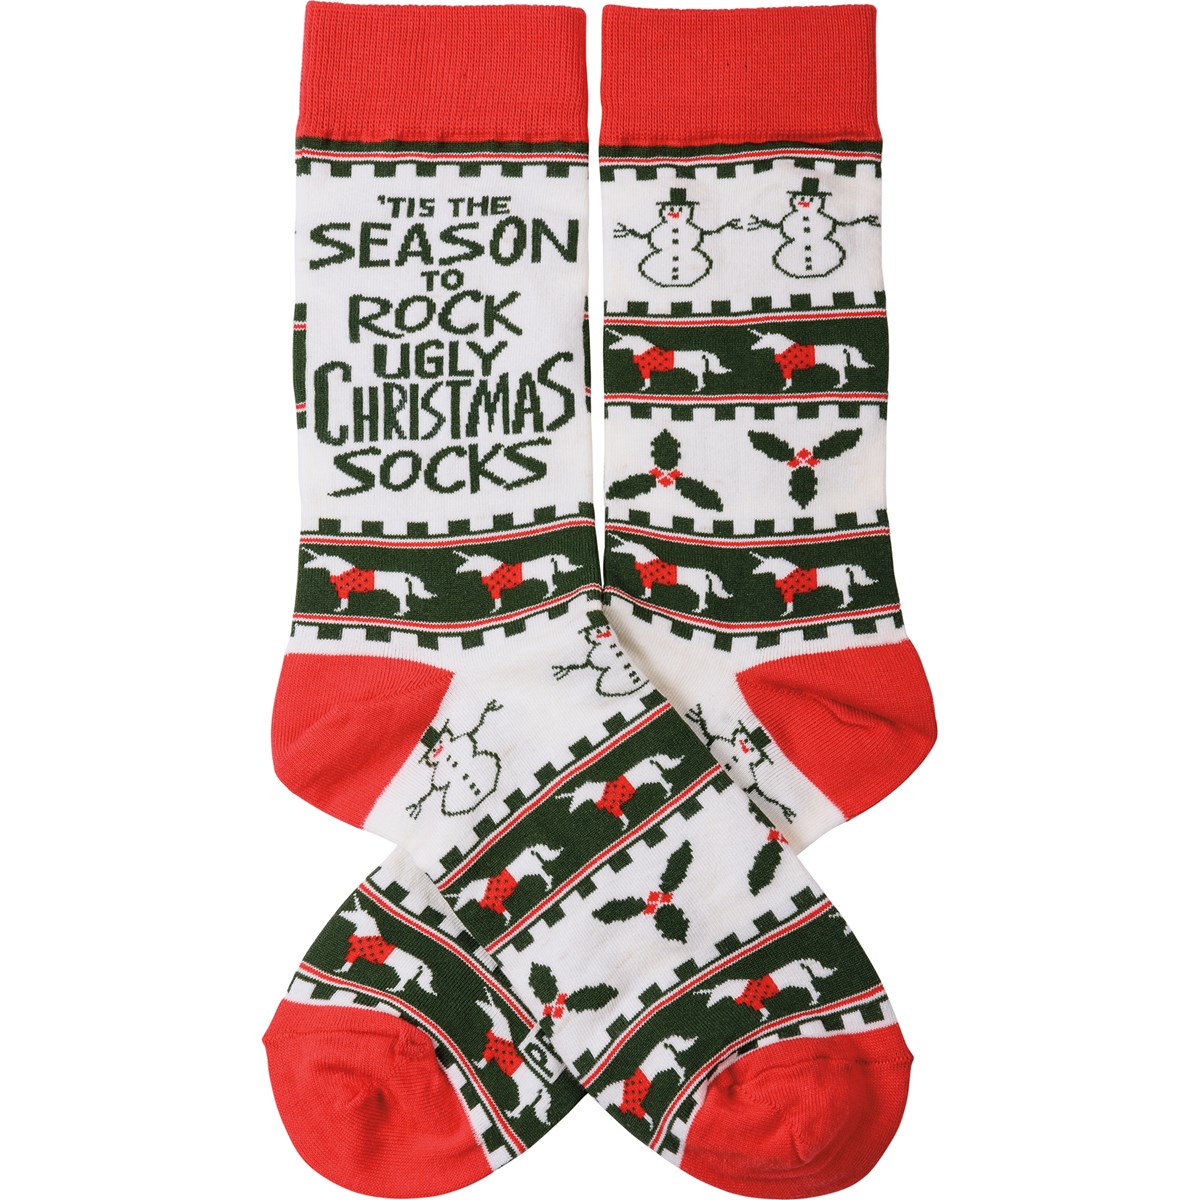 Season To Rock The Ugly Christmas Socks Socks - Cotton, Nylon, Spandex